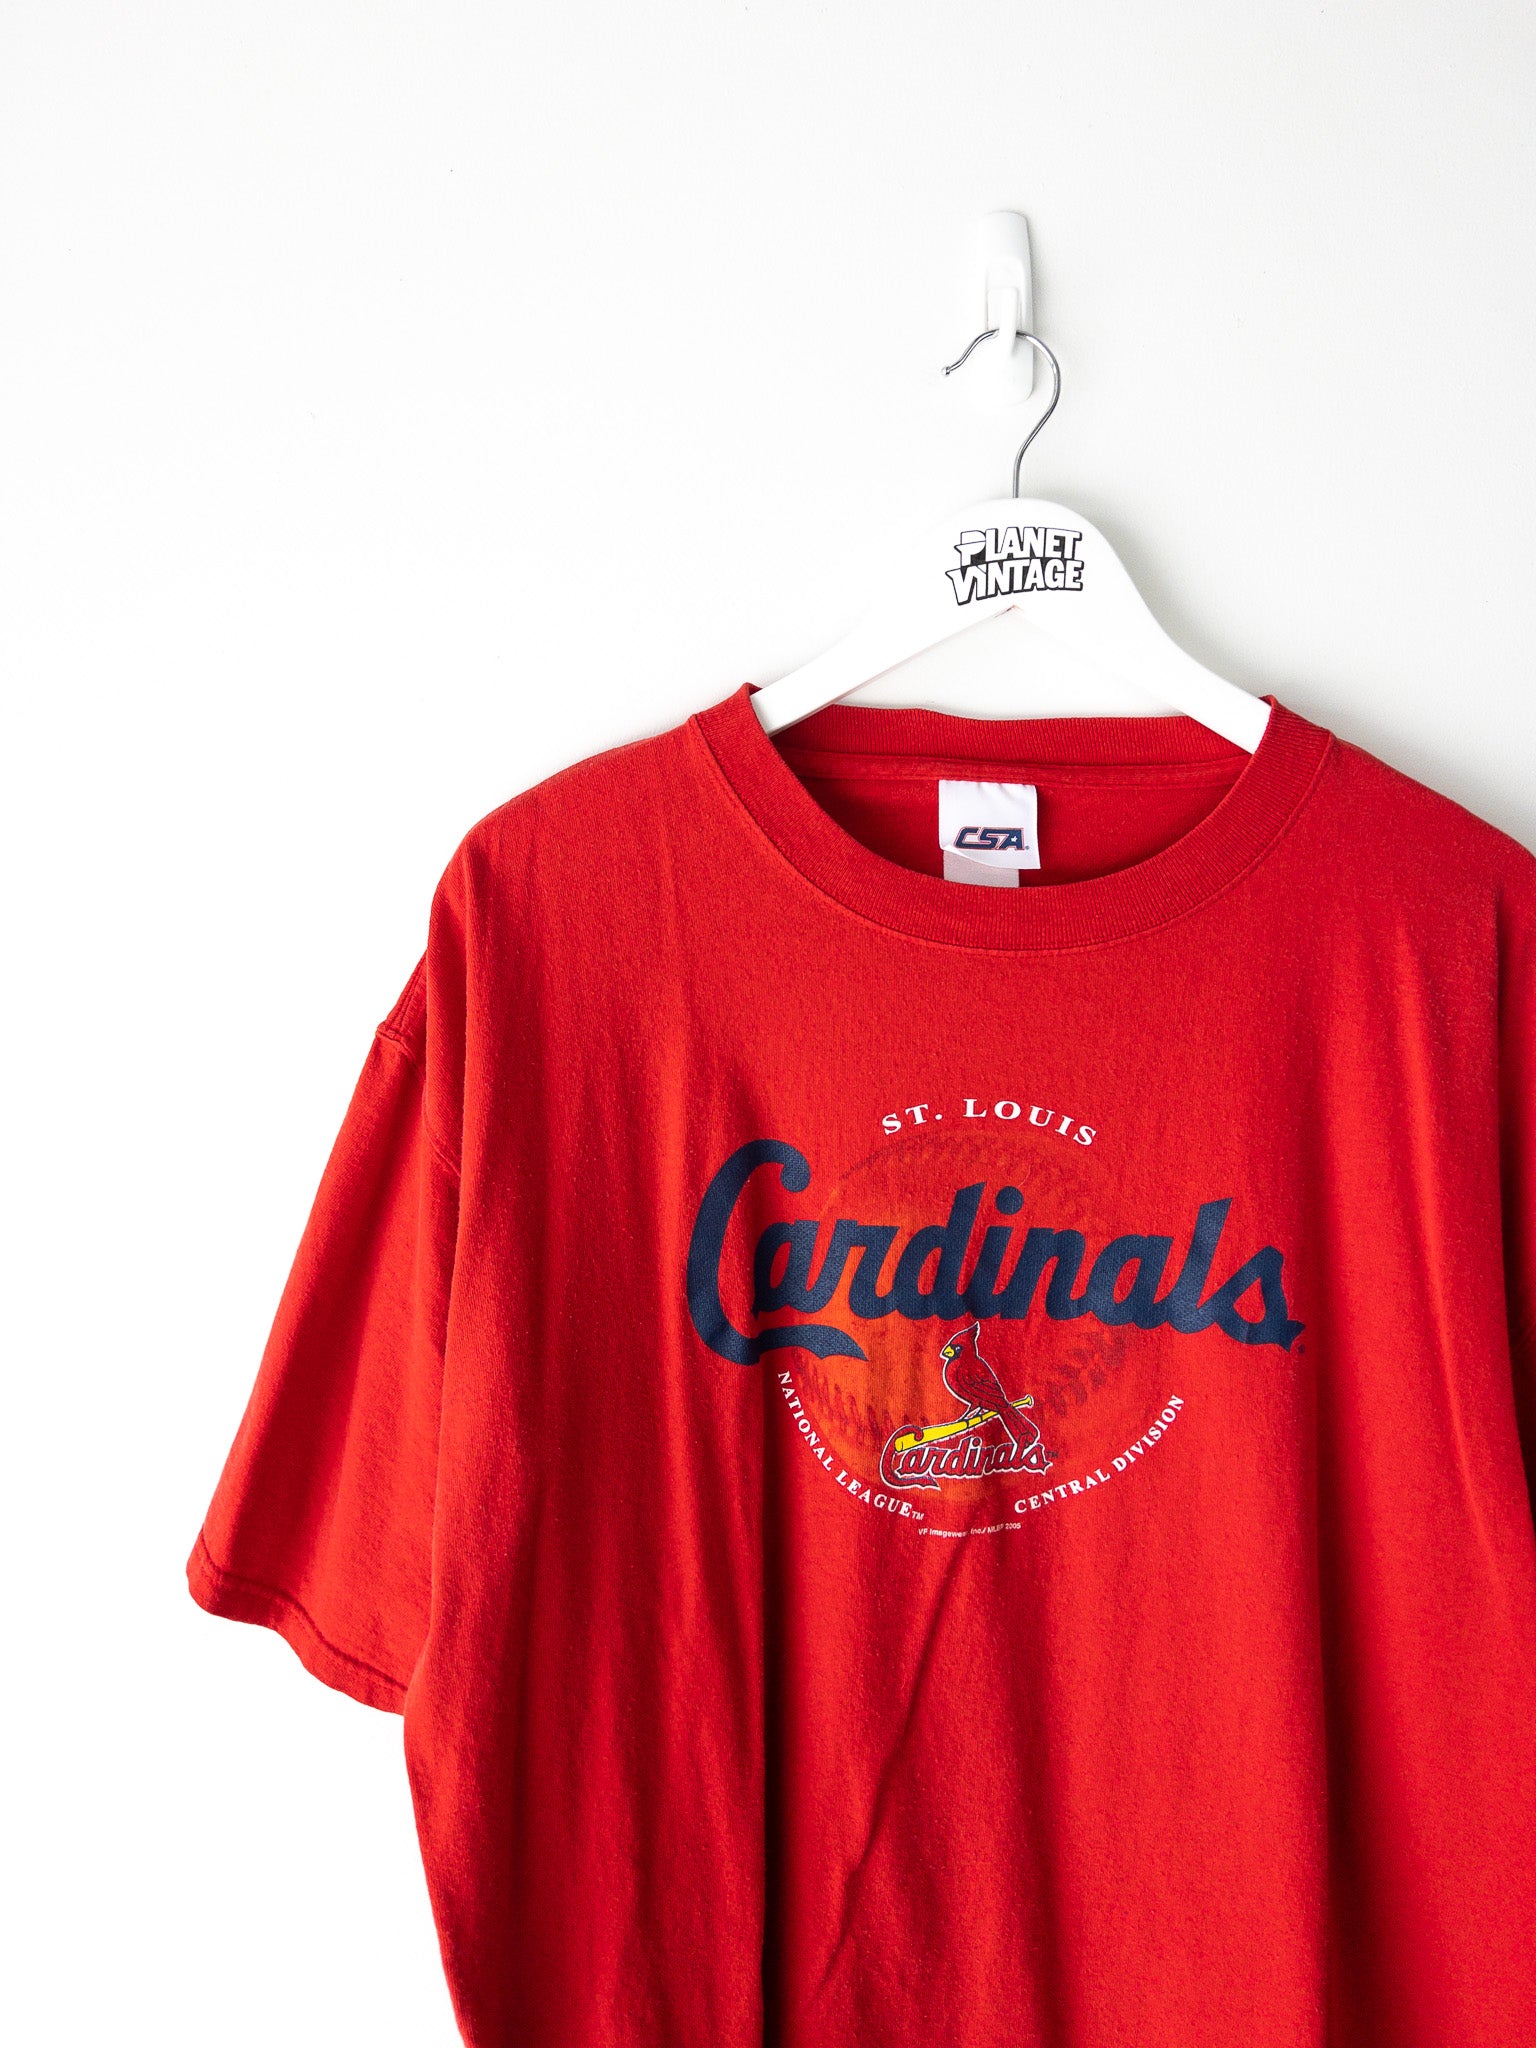 Vintage St Louis Cardinals Tee (XL)